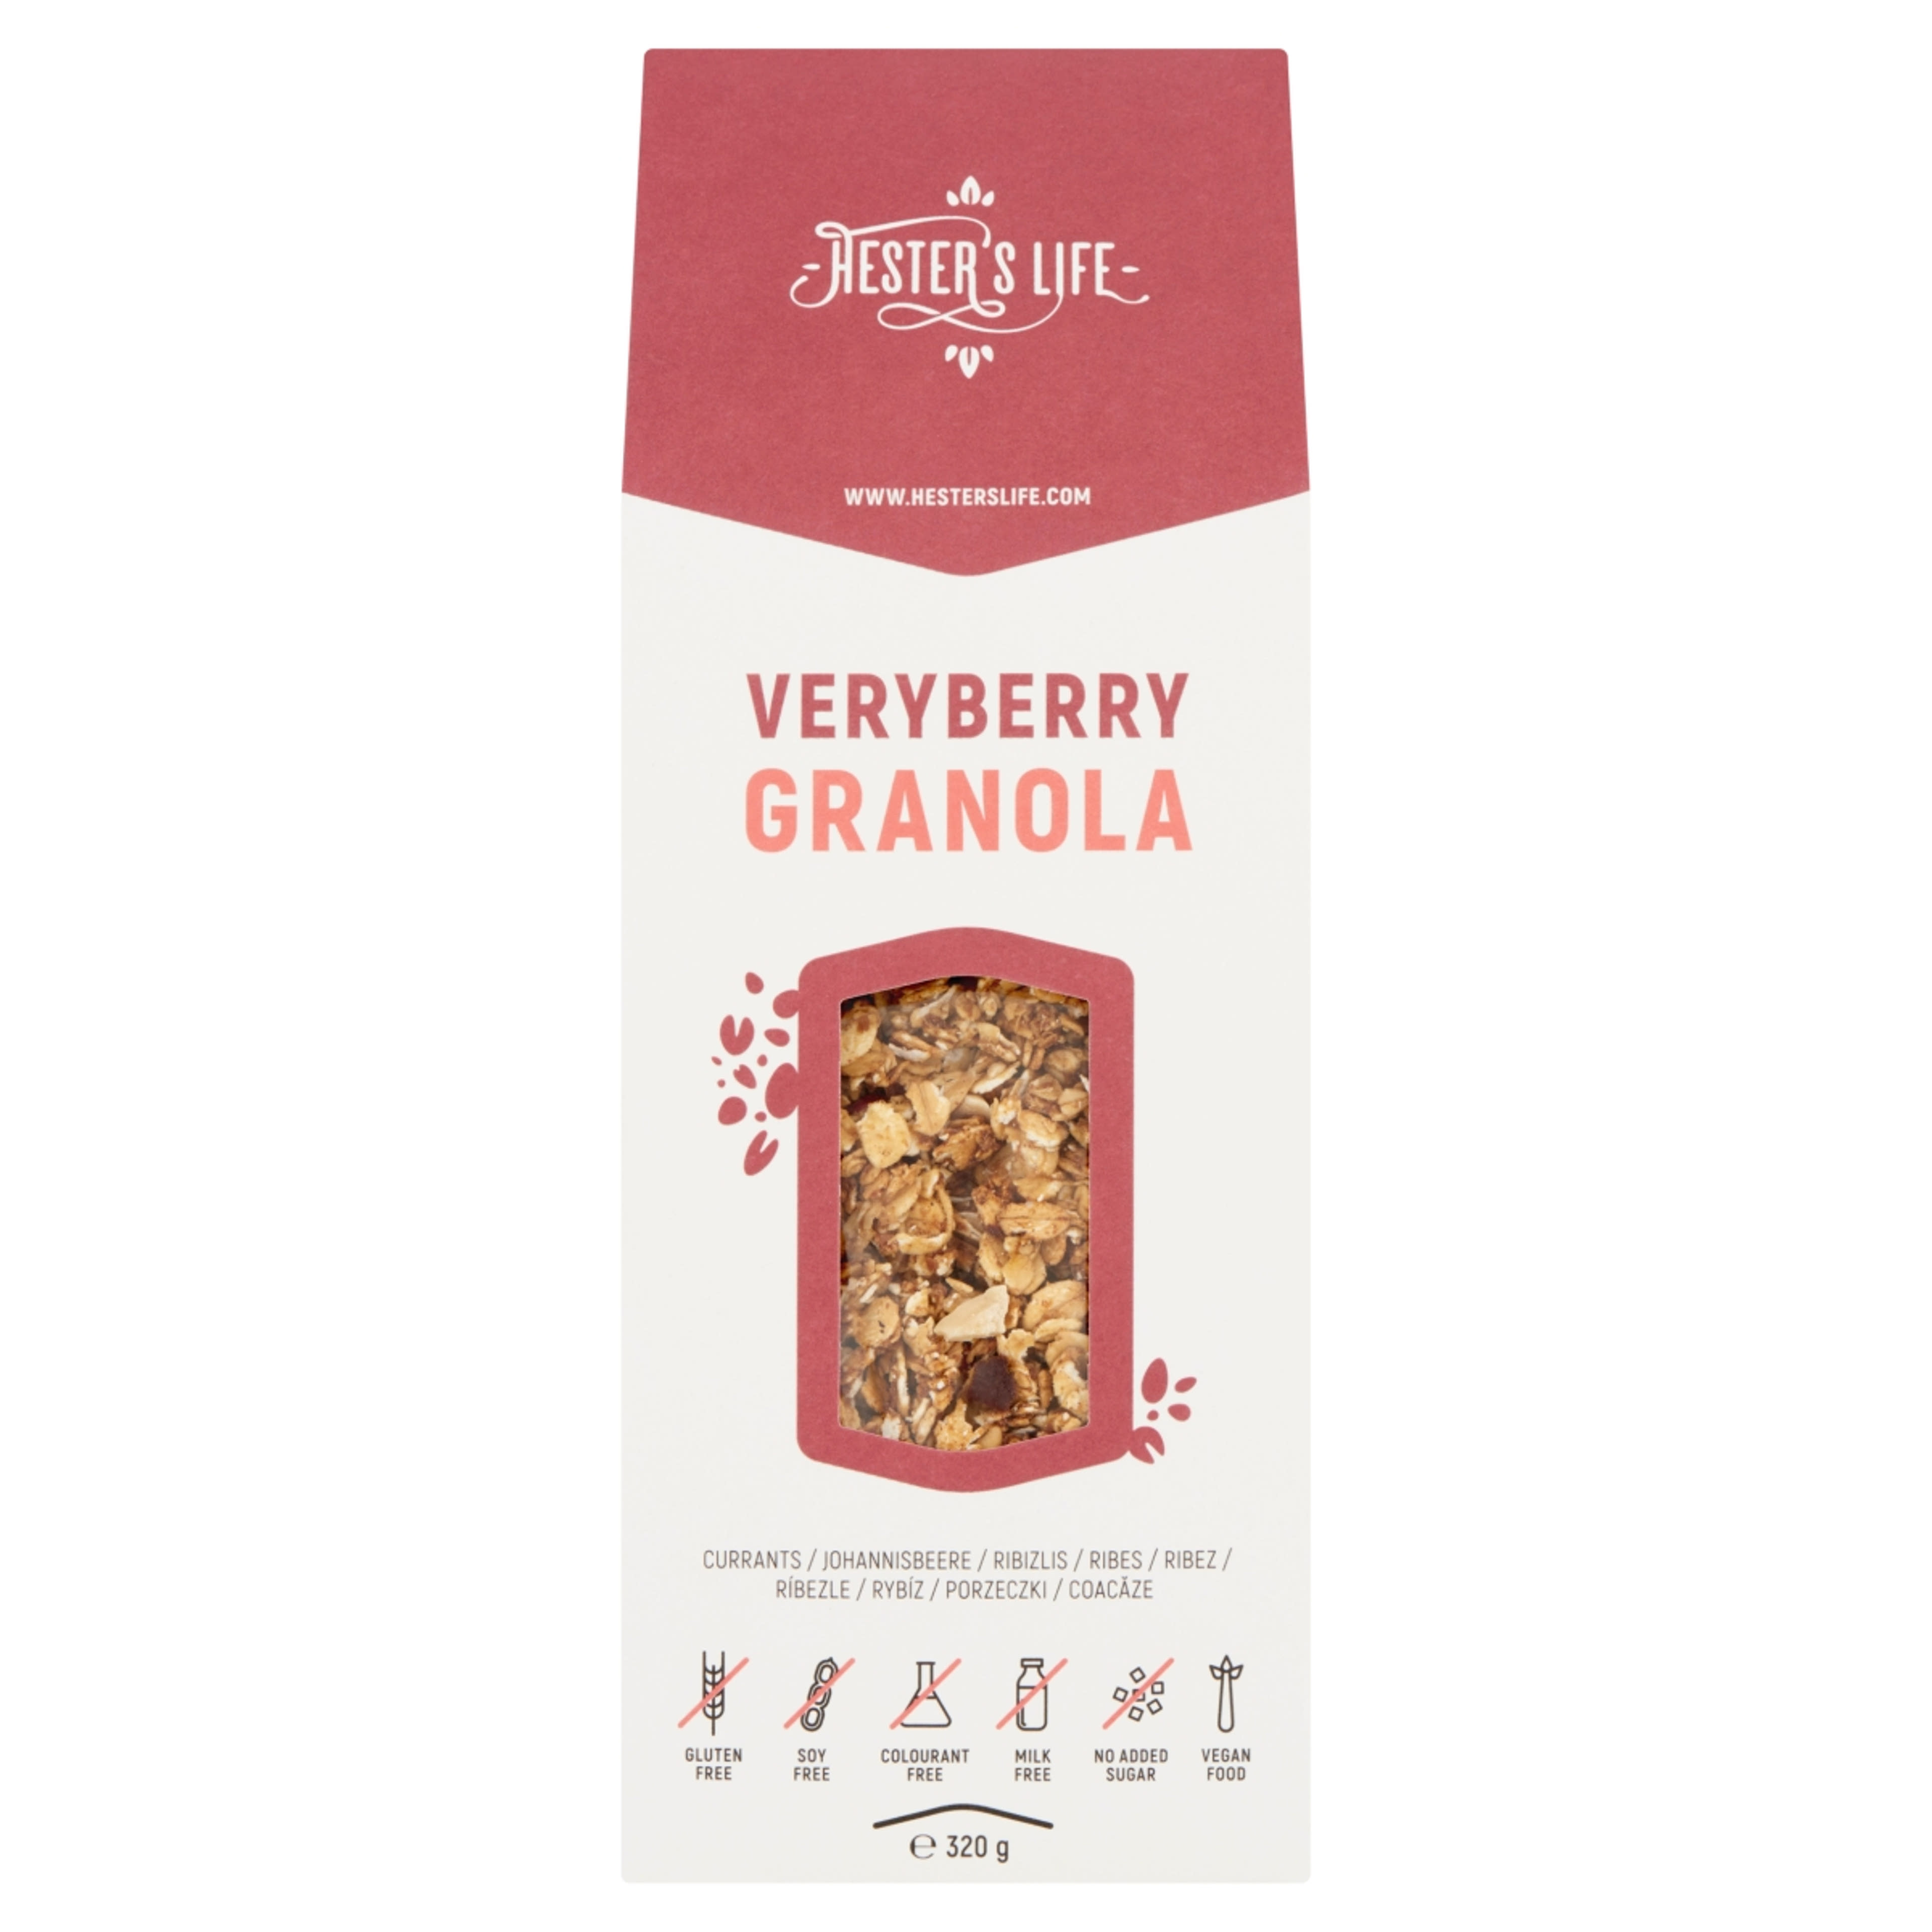 Hester's life veryberry granola - 320 g-1